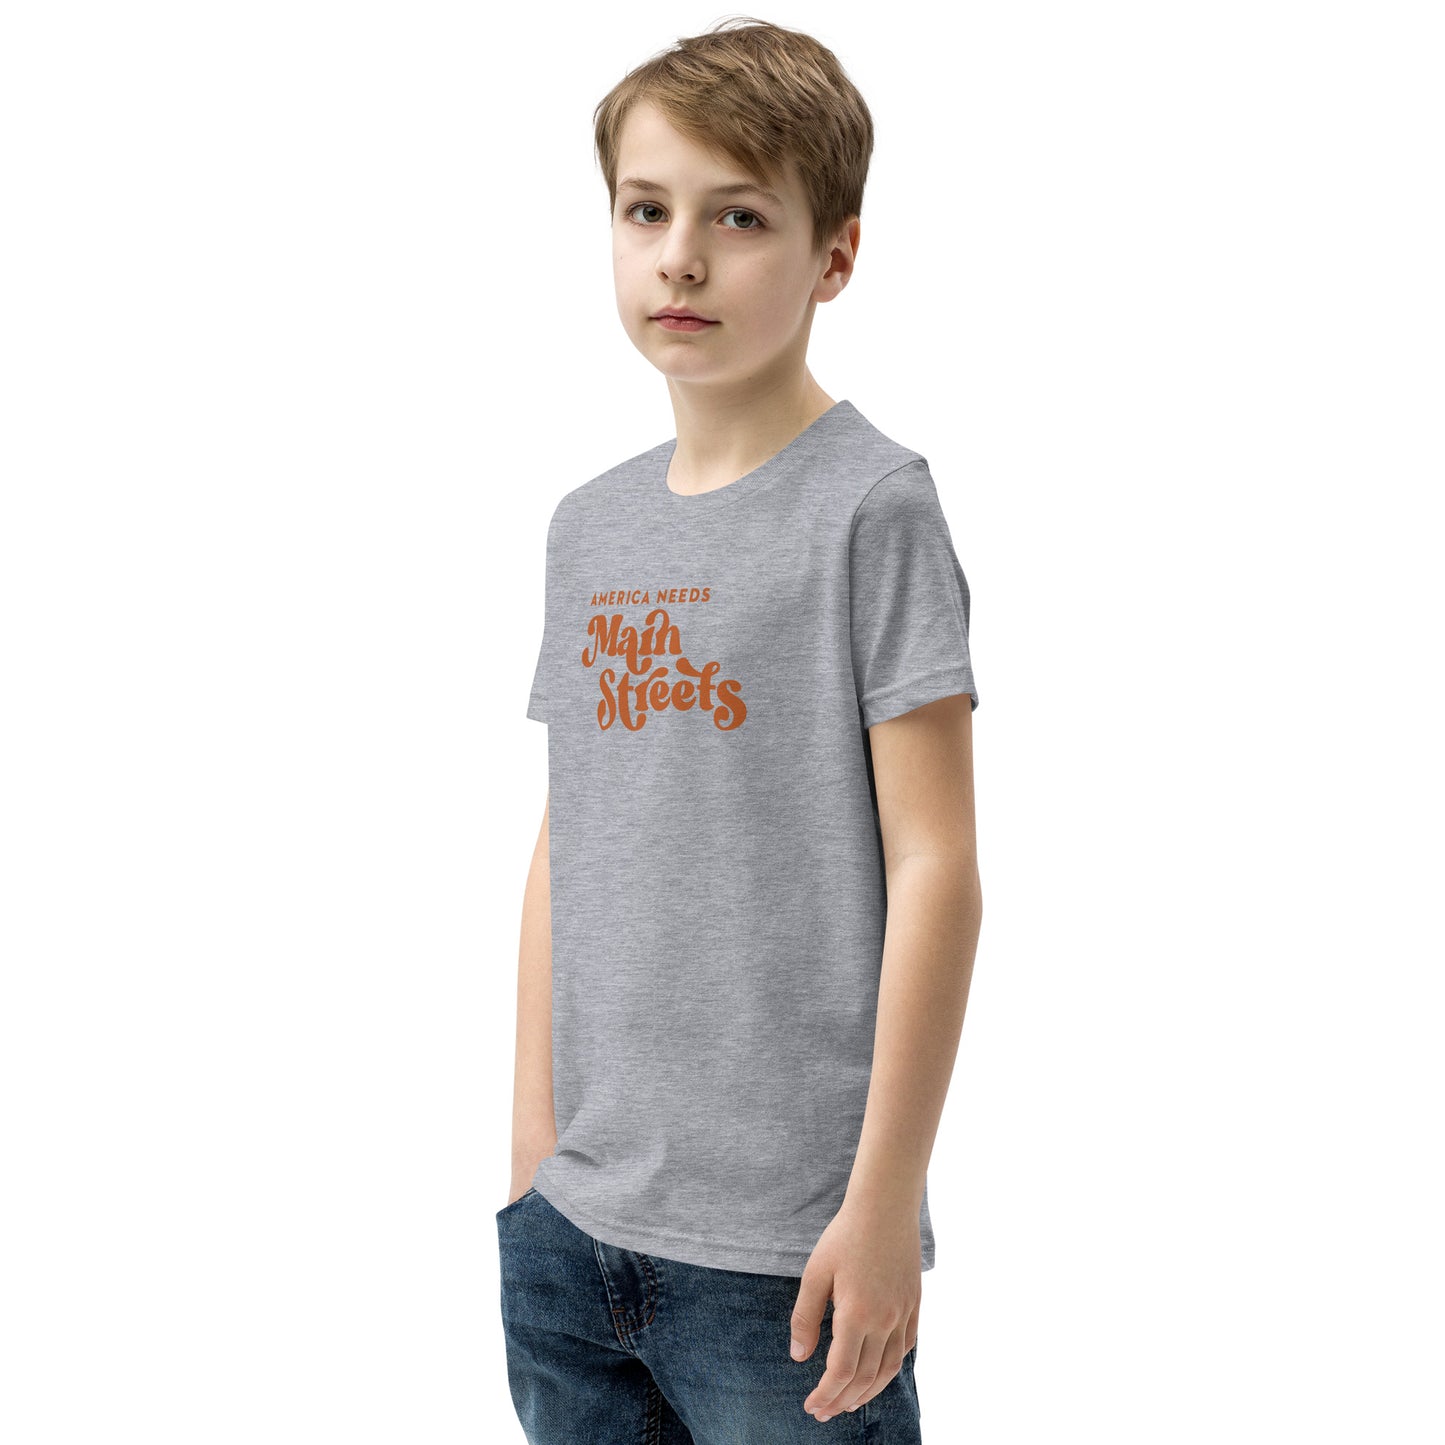 "America Needs Main Streets" Orange Youth Short Sleeve T-Shirt